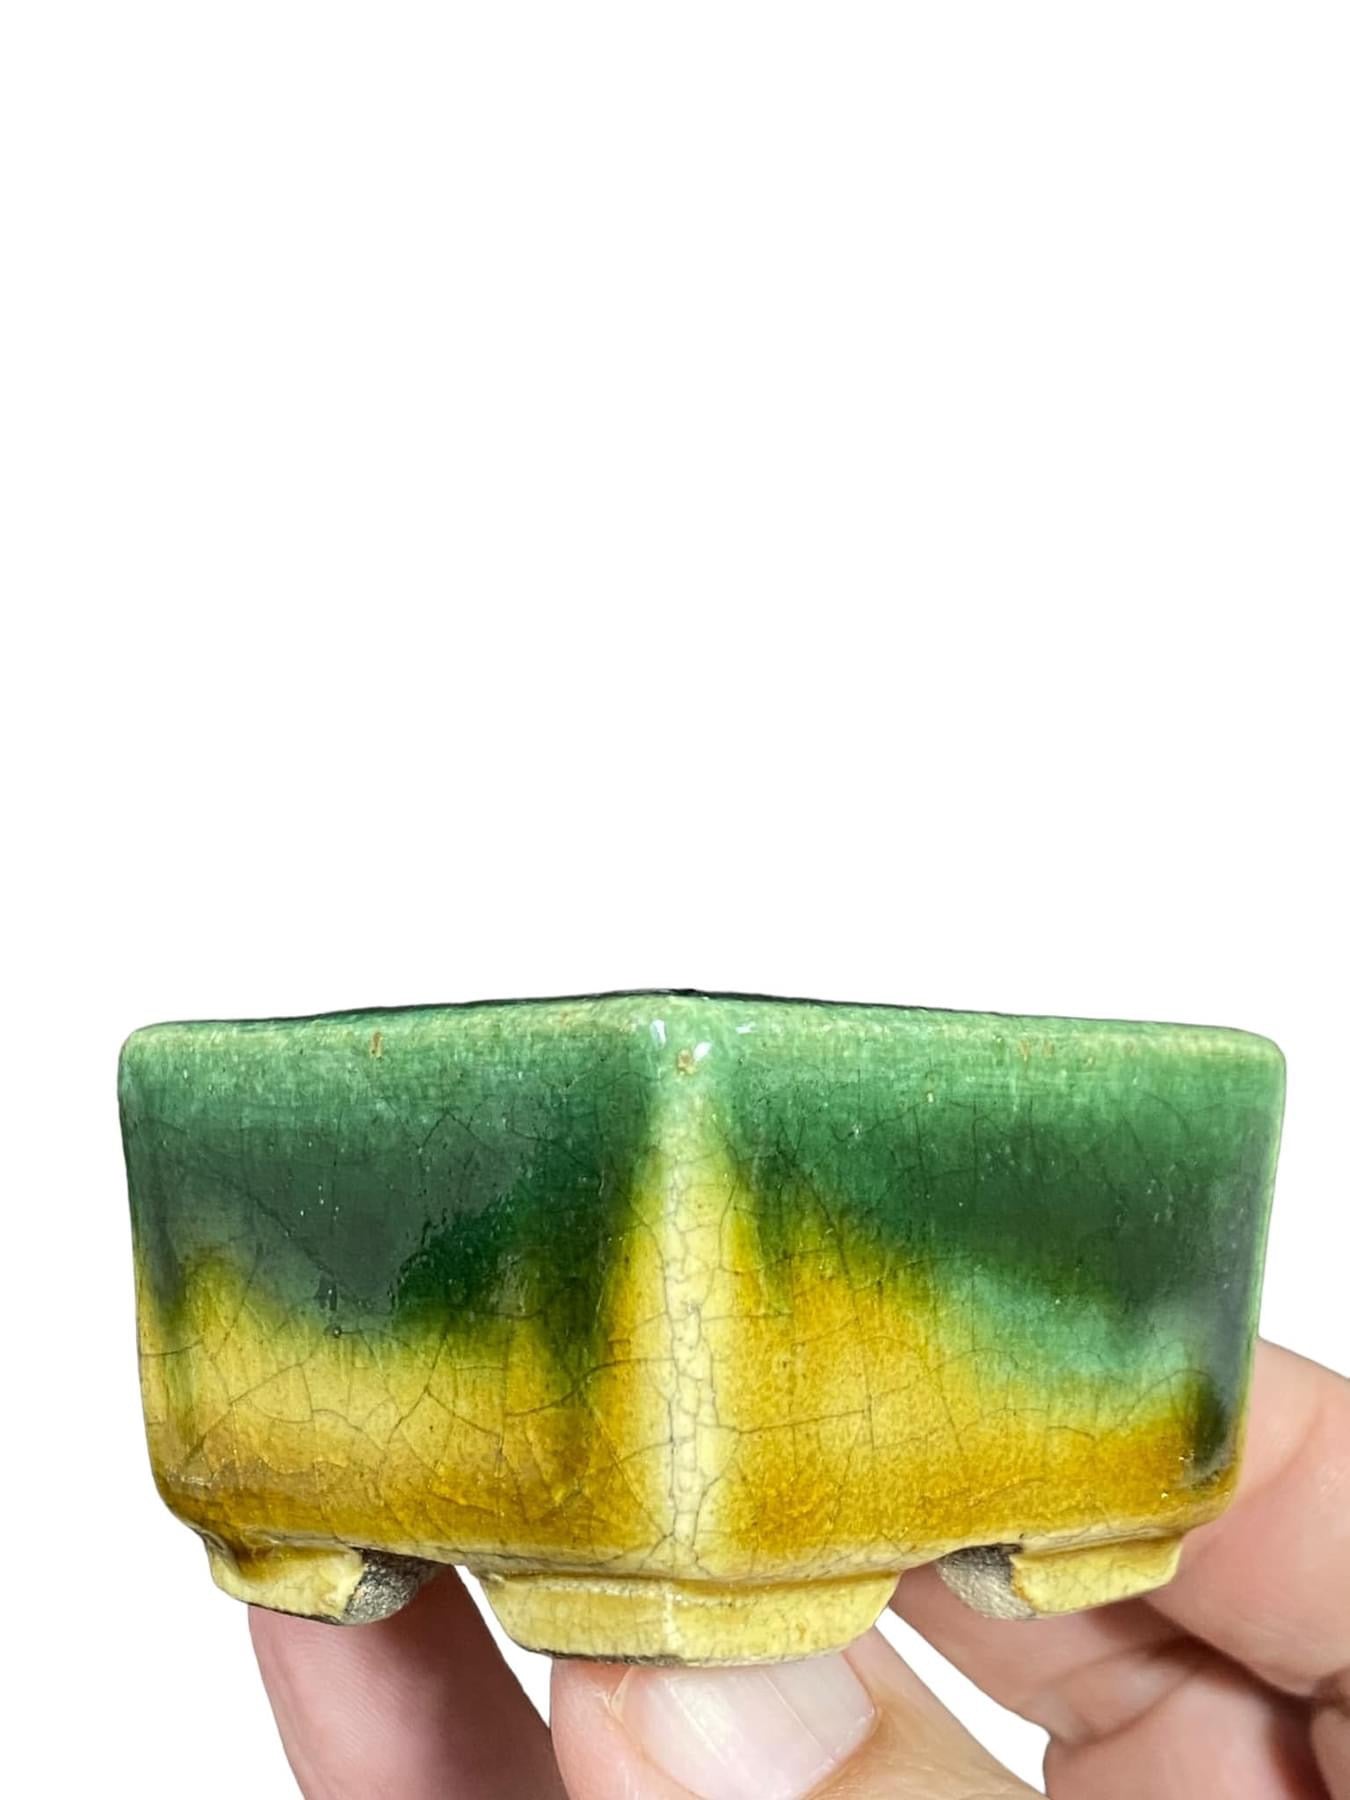 Satomi Terahata - Green and Yellow Crackle Glazed Bonsai Pot (2-3/16” wide)